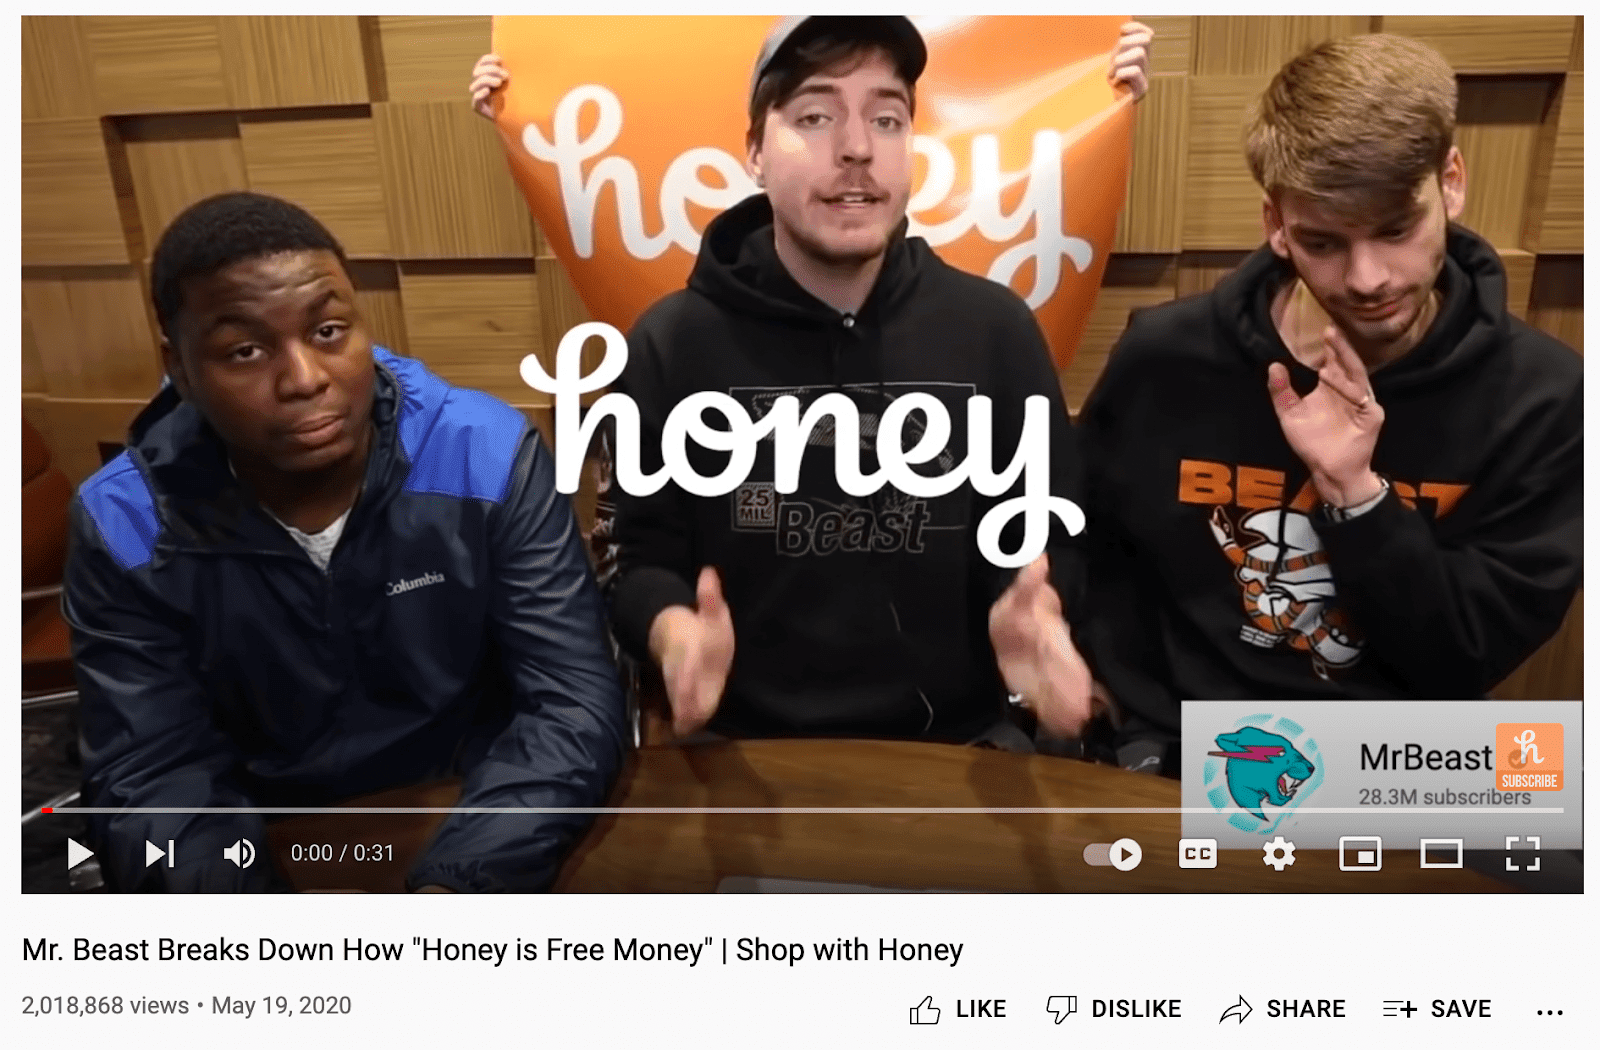 "Mr. Beast Breaks Down How "Honey Is Free Money"" video on YouTube